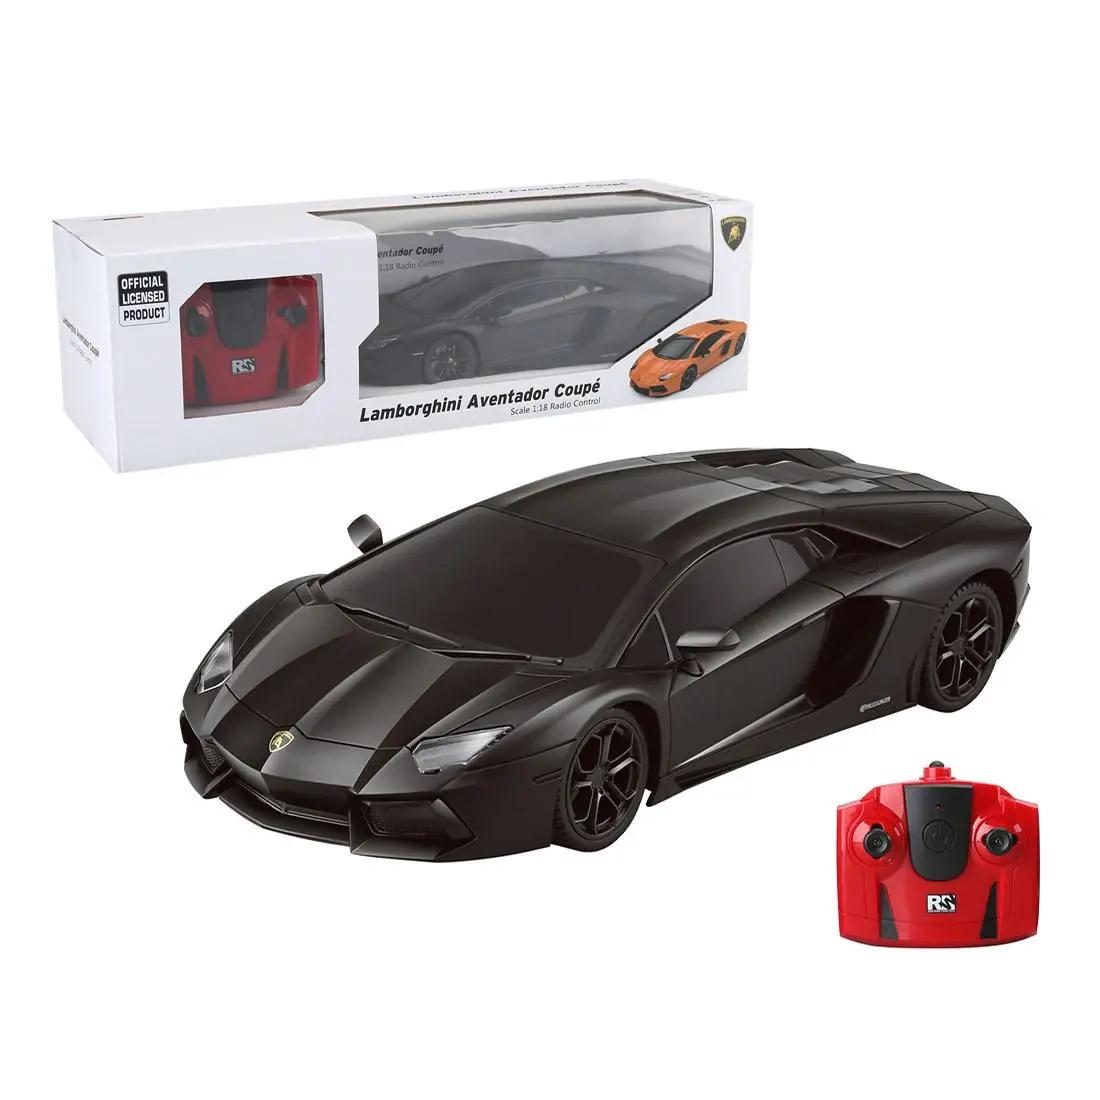 Lamborghini Toy Remote Control: Design and Control Systems: A Perfect Combination for the Lamborghini Toy Remote Control